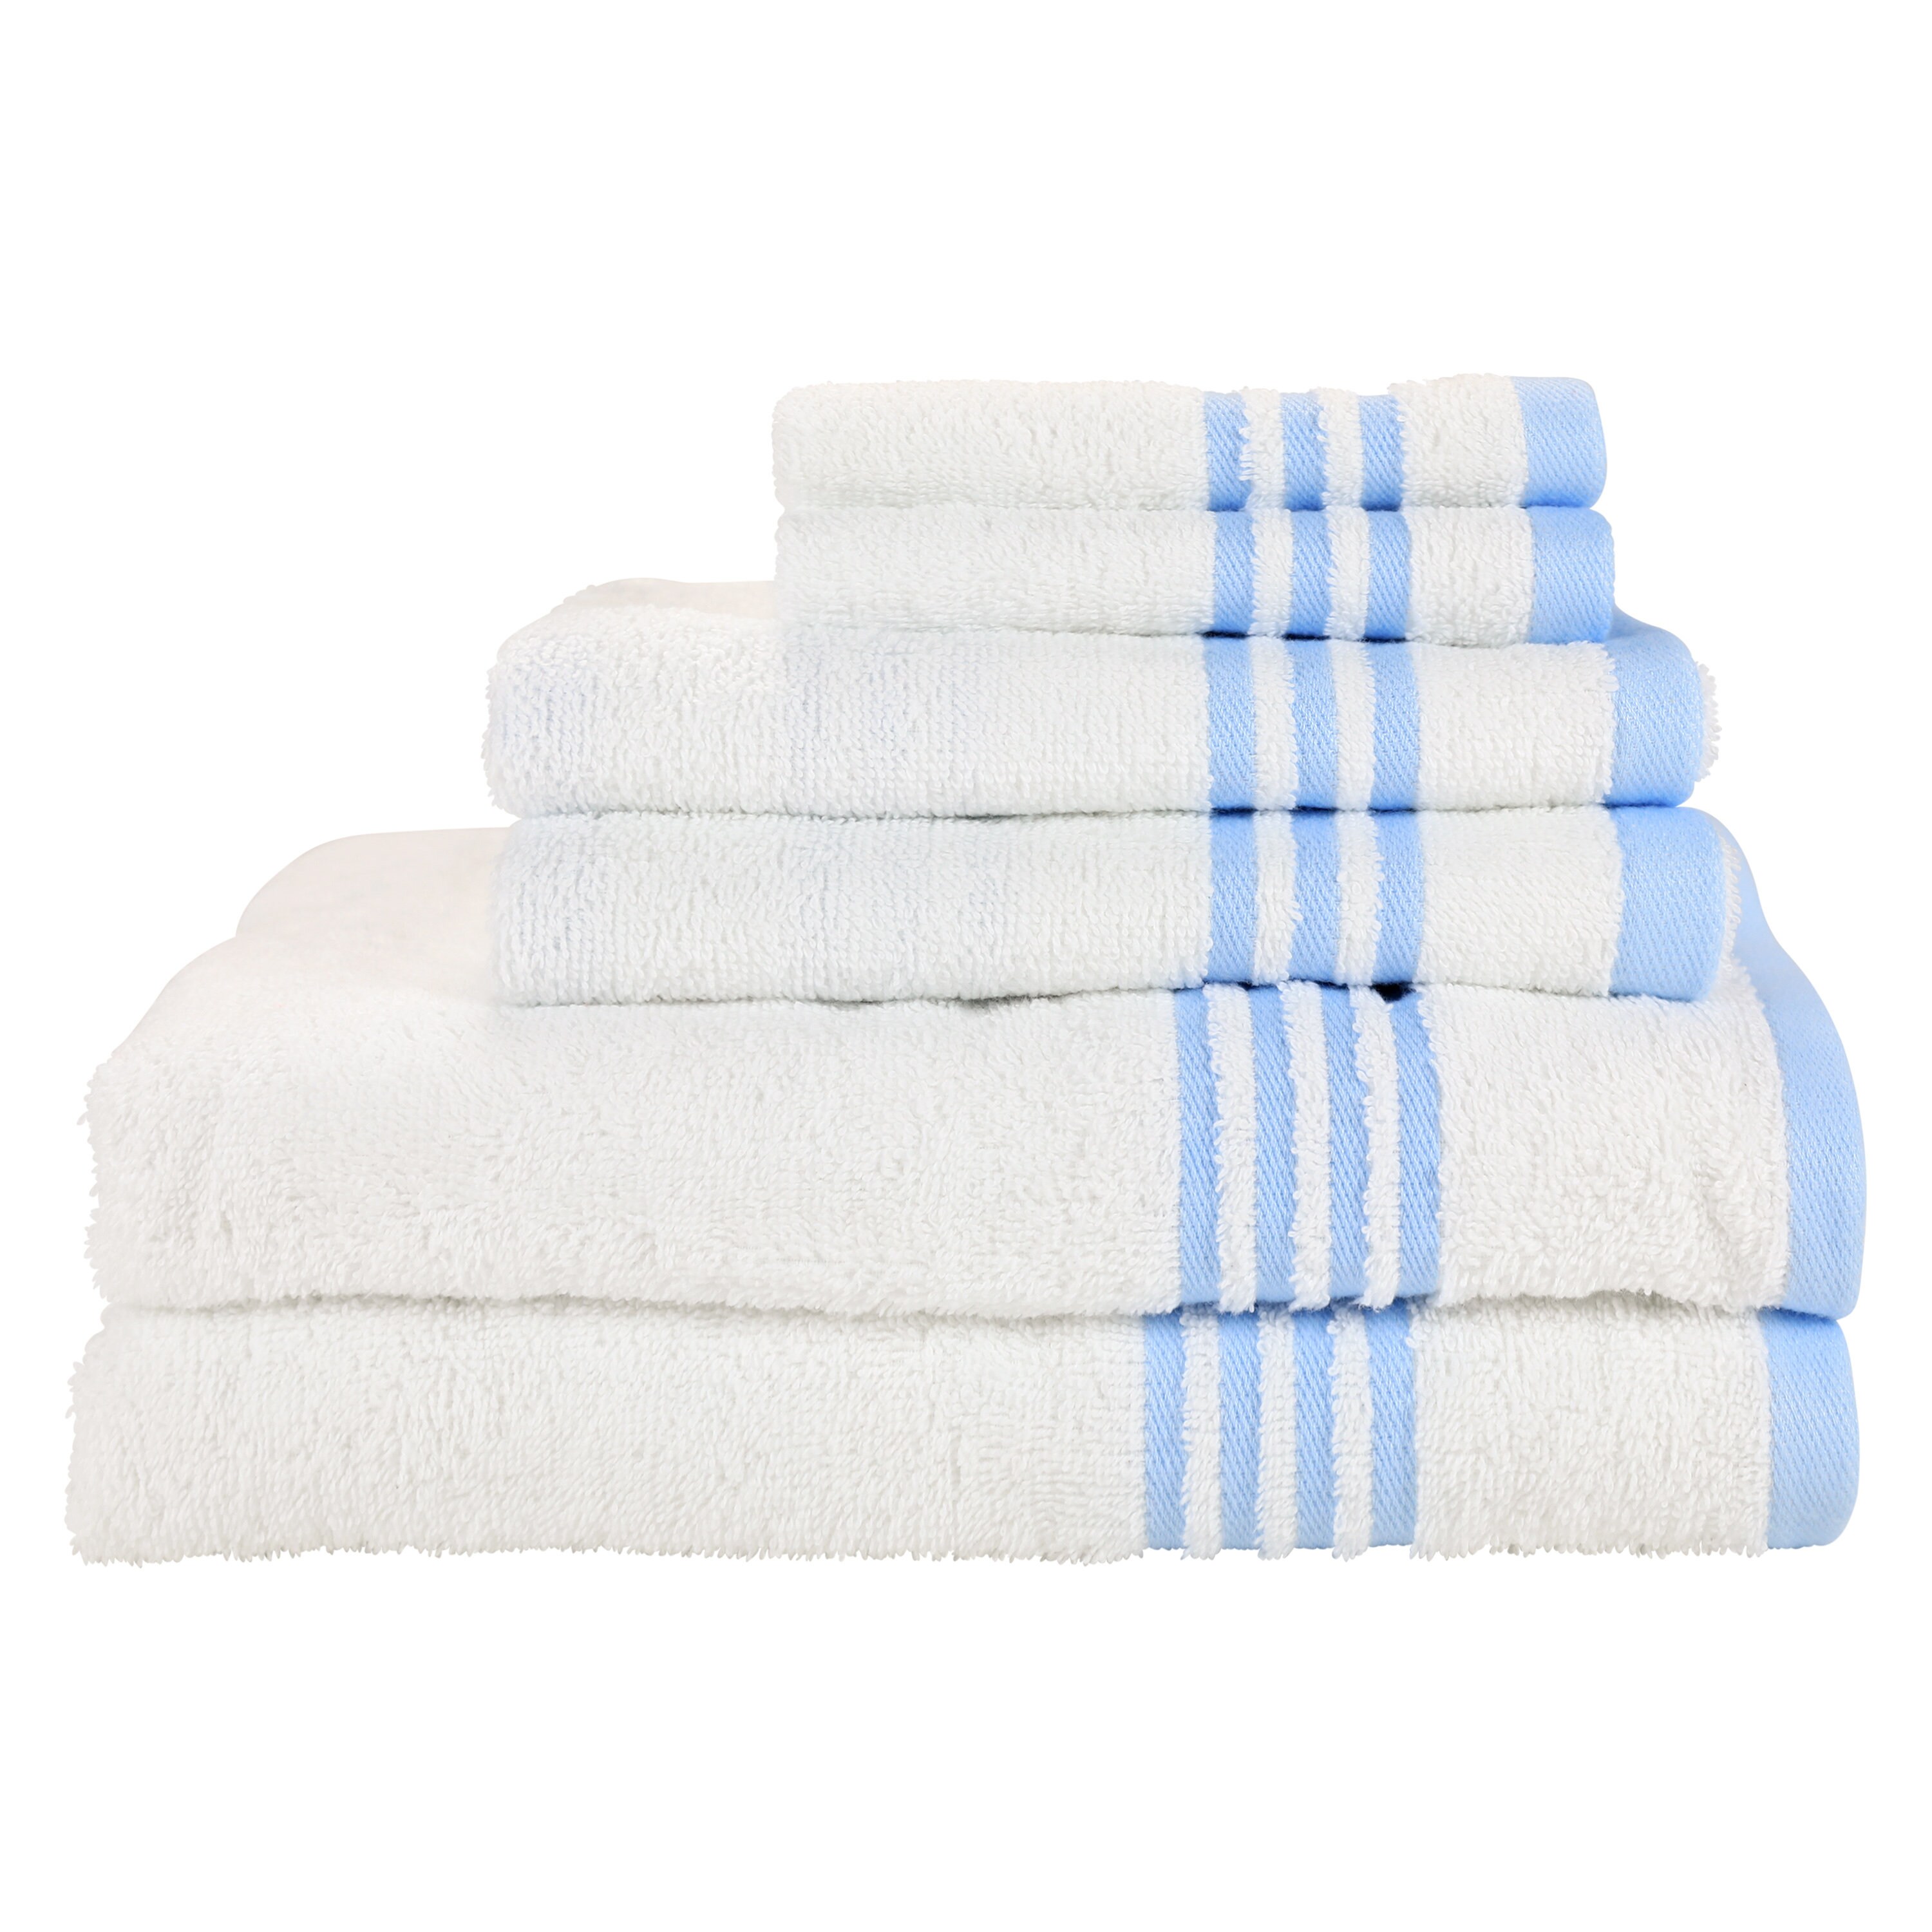 6 Piece Metro Bathroom Towel Set Soft Ring-Spun Cotton Striped Color Options 